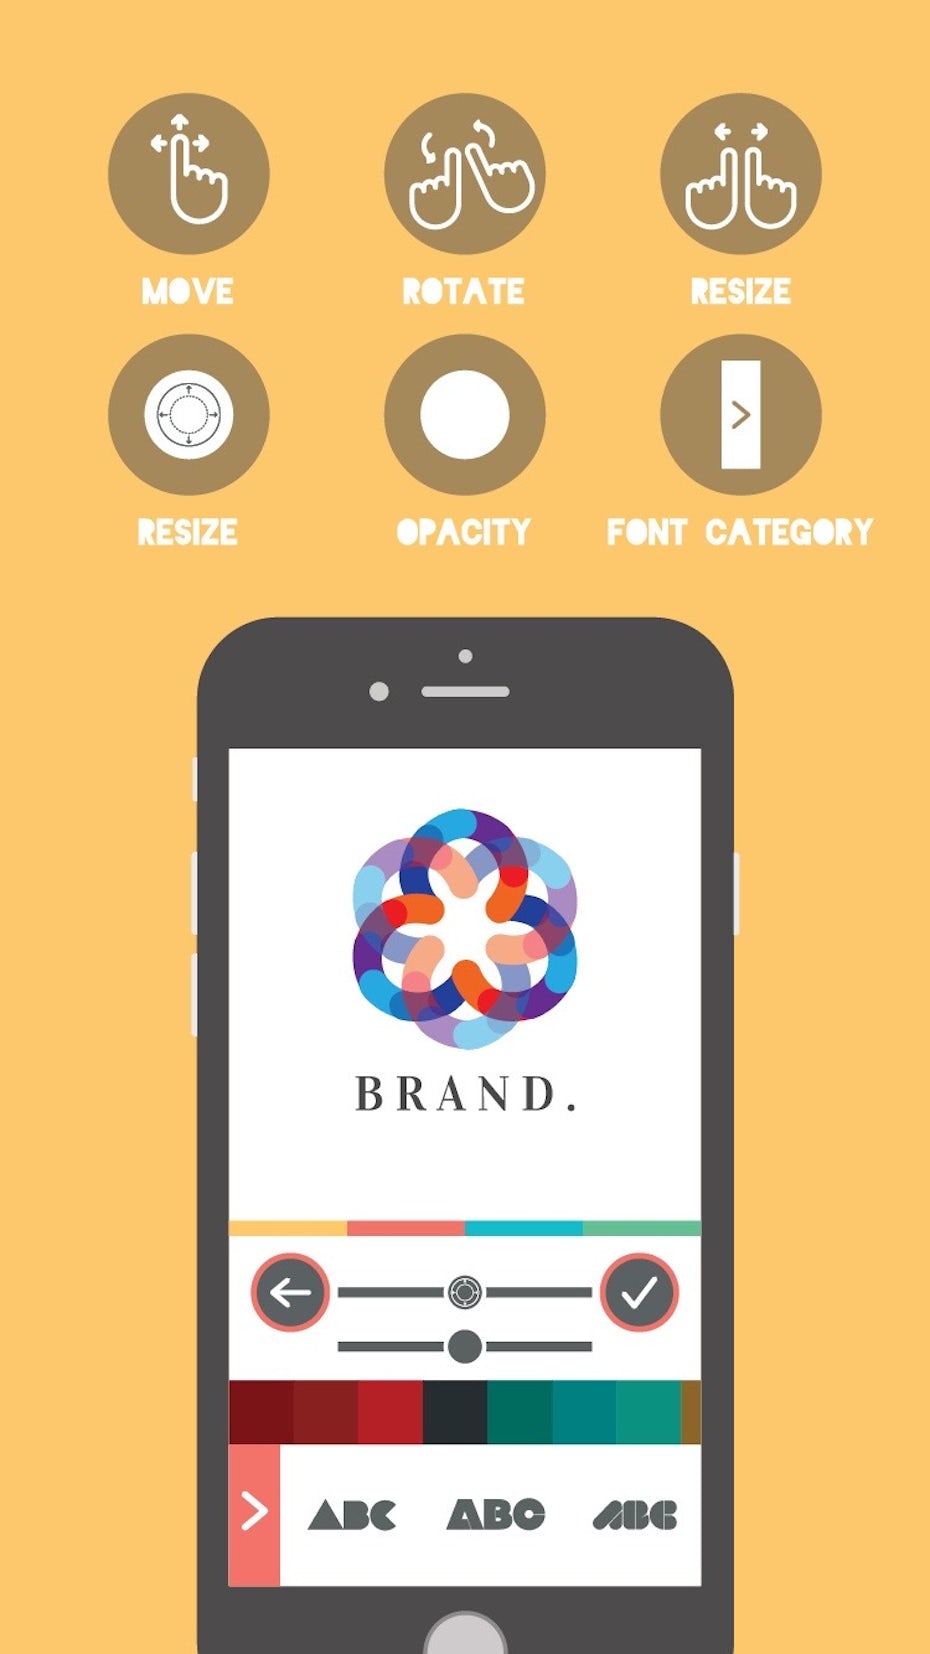 application logo design